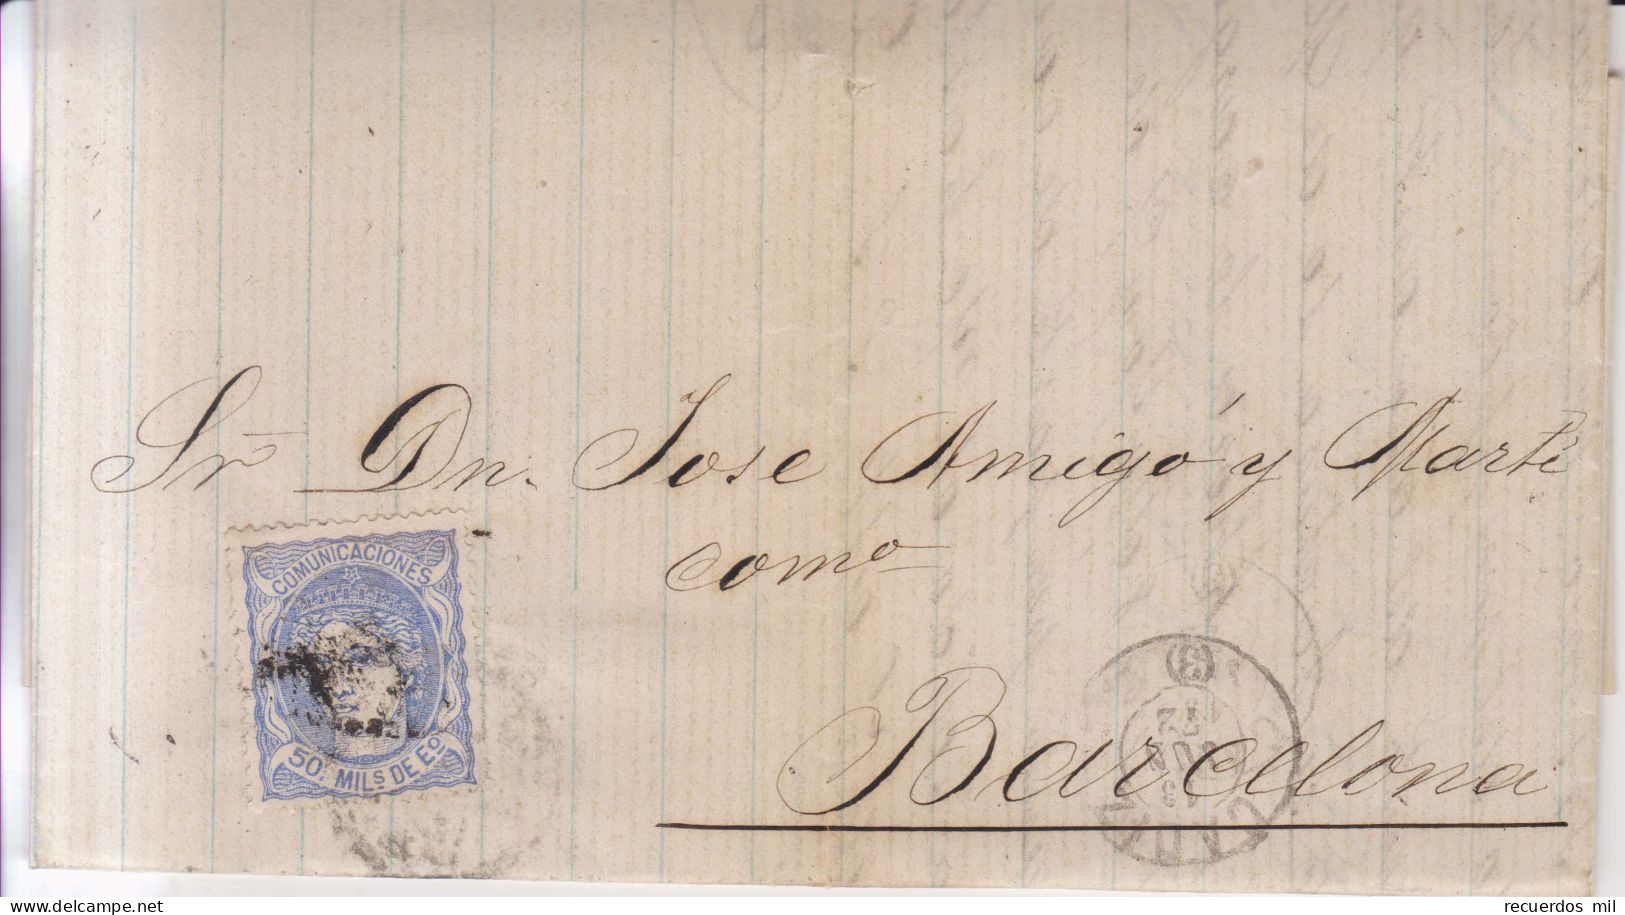 Año 1870 Edifil 107 Alegoria Carta Matasellos Rombo Cadiz N. Herrero Y Cuesta - Storia Postale